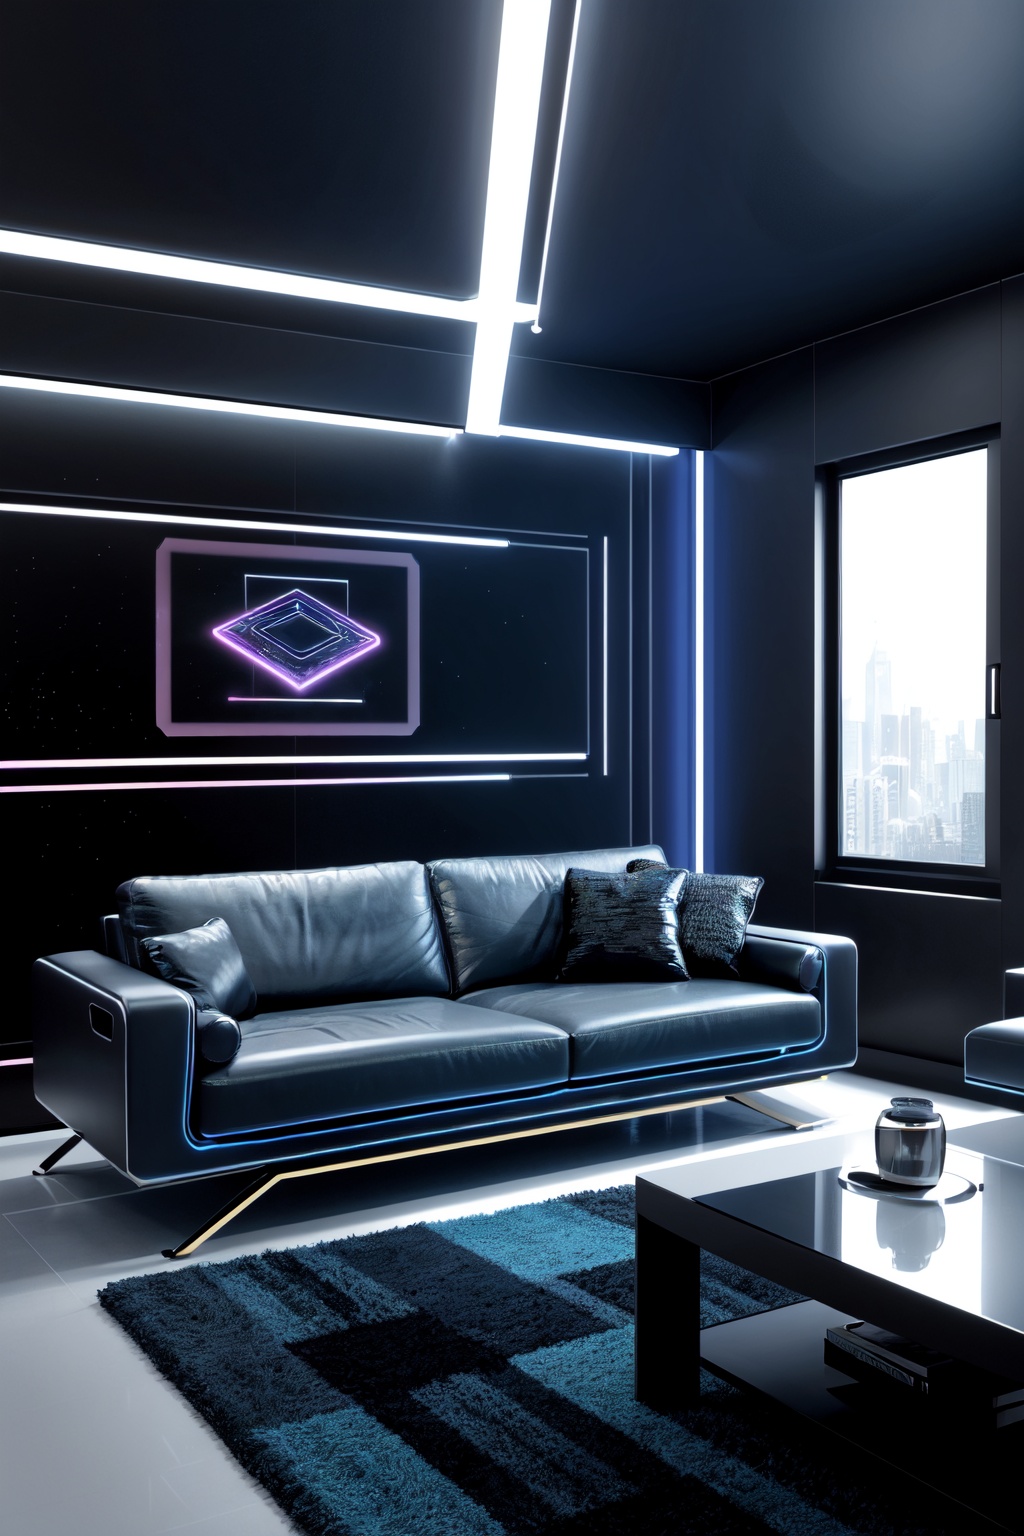 cyberpunkAI, futuristic living room, holographic technology, digital interface, modern furniture, high-tech interior, sci-fi concept art, digital rendering, blue and black color scheme, clean lines, minimalist design,<lora:cyberpunkAI:0.8>,, masterpiece,best quality,